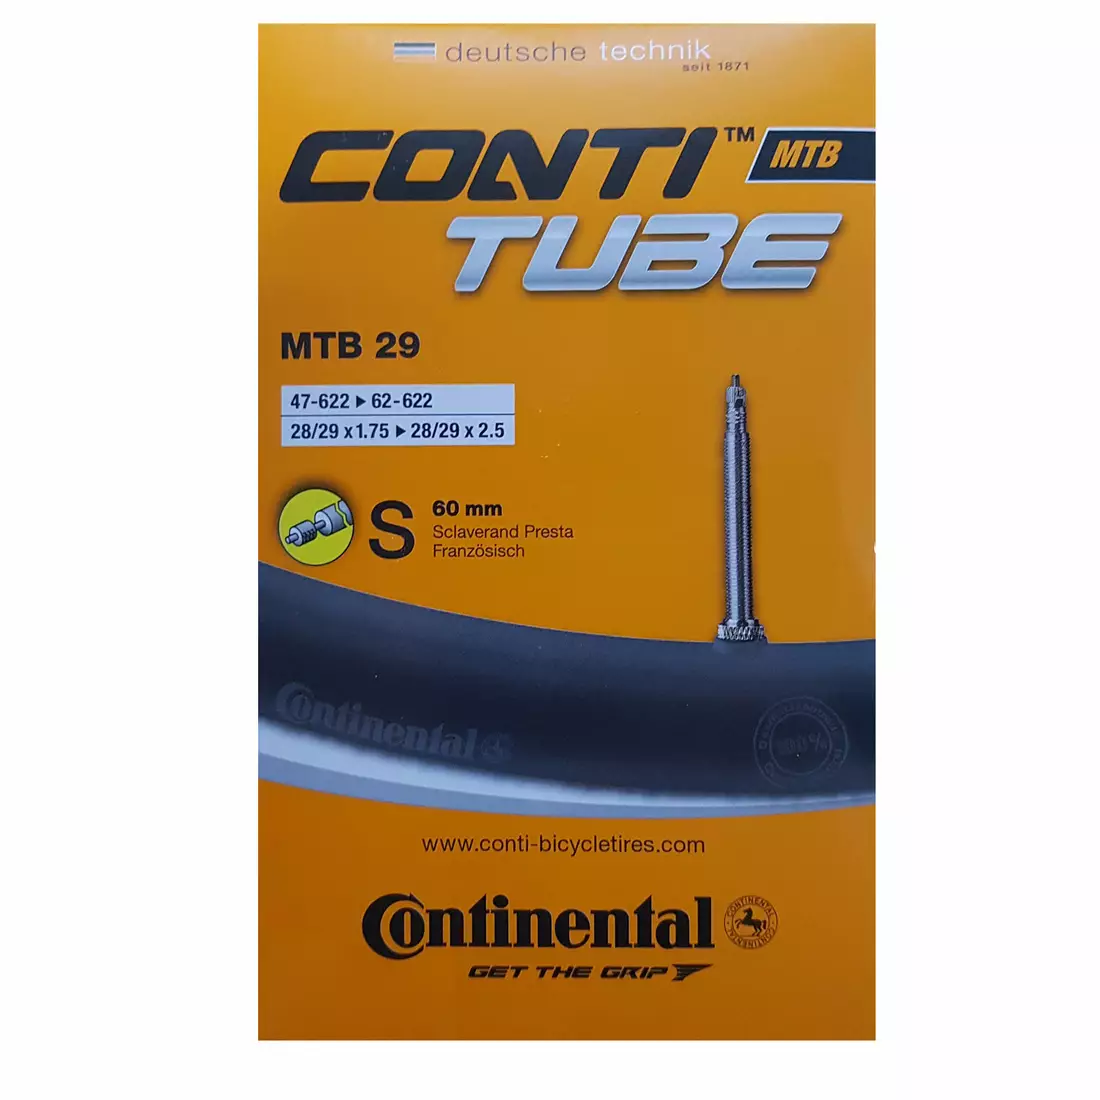 CONTINENTAL SS18 bicycle inner tube MTB 28/29 presta 60mm 47-622/62-622 28/29x1.75-28/29x2.5